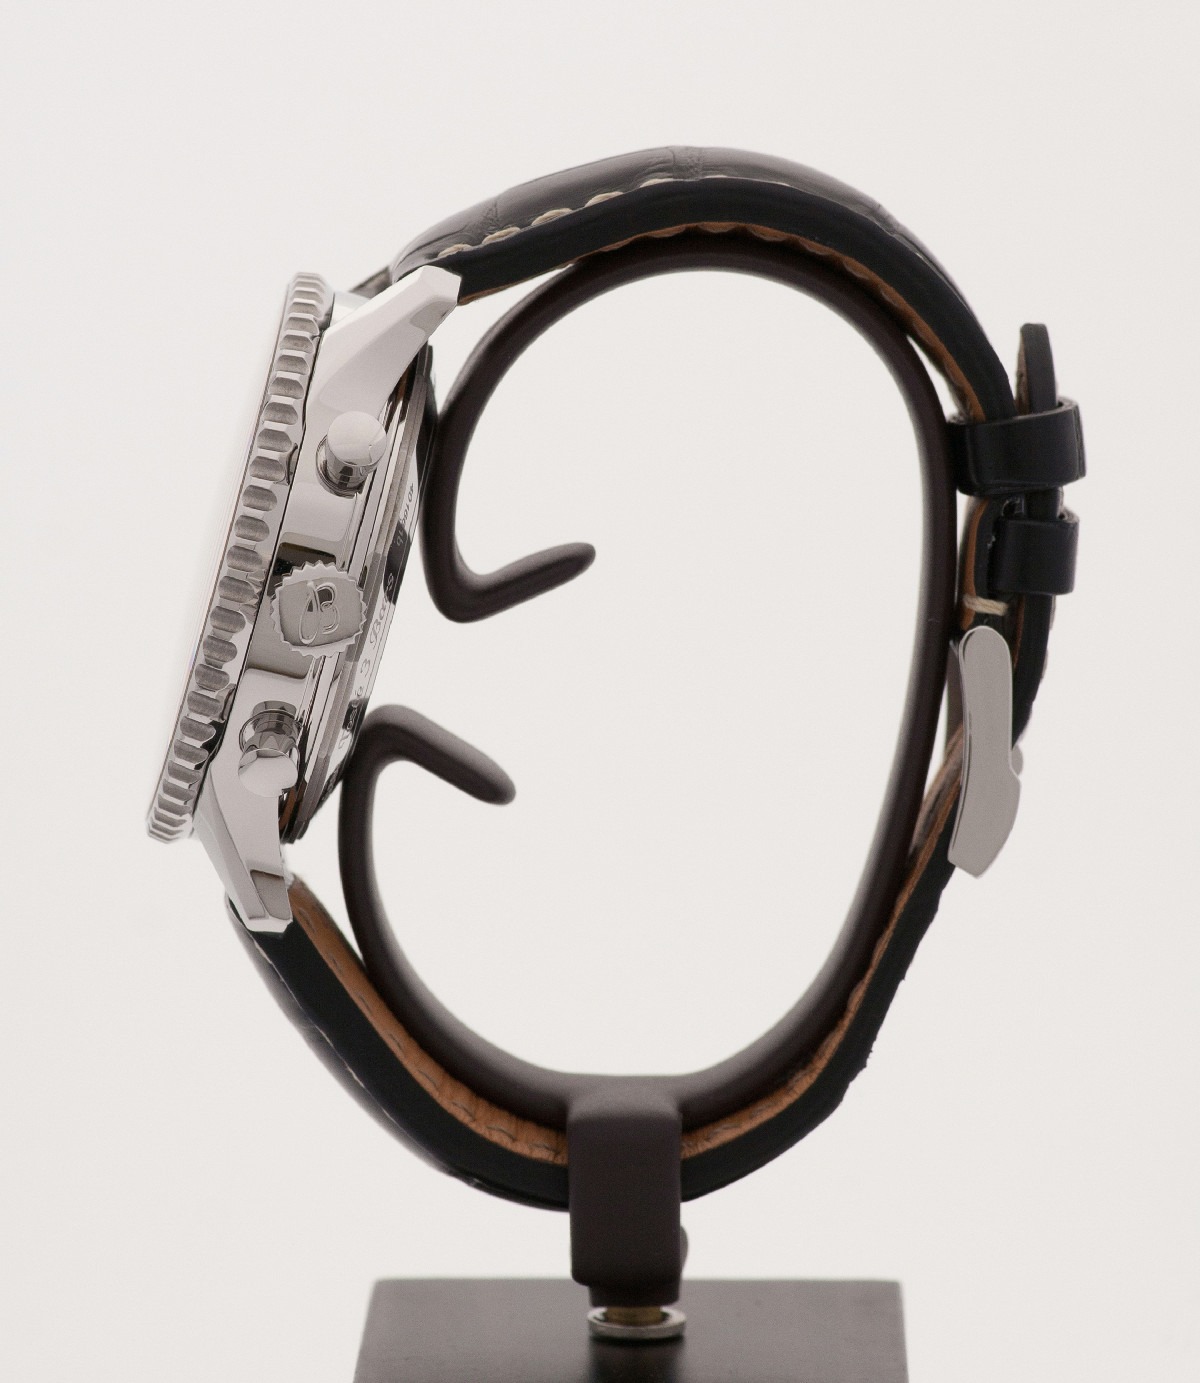 Breitling Navitimer World B04 Black Dial watch, silver